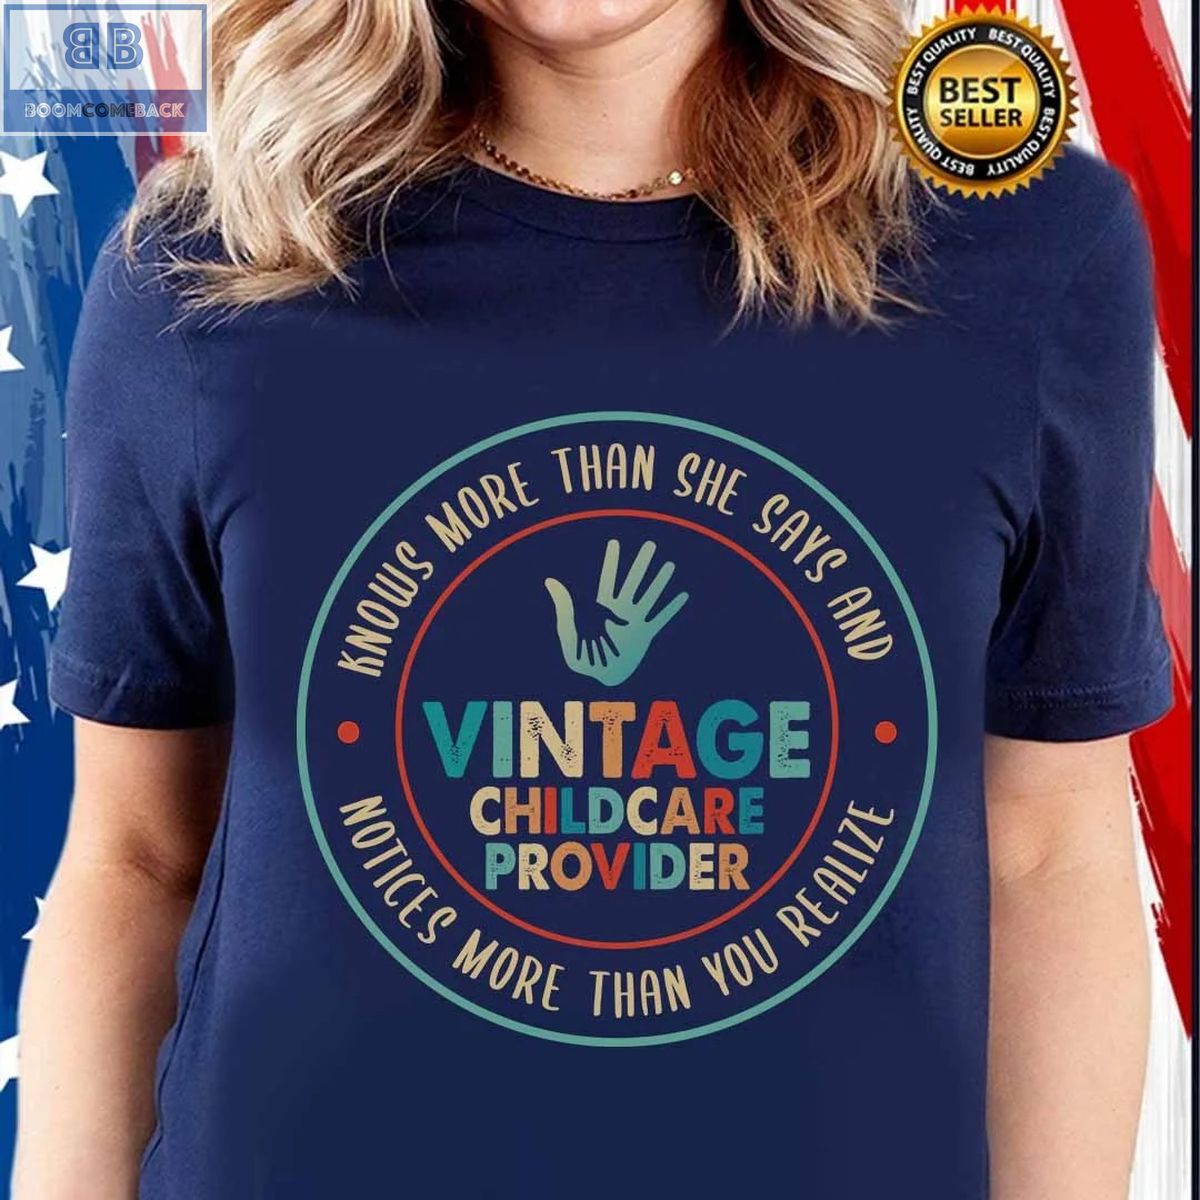 Hand Circle Vintage Childcare Provider Shirt Vintage Childcare Provider Shirt